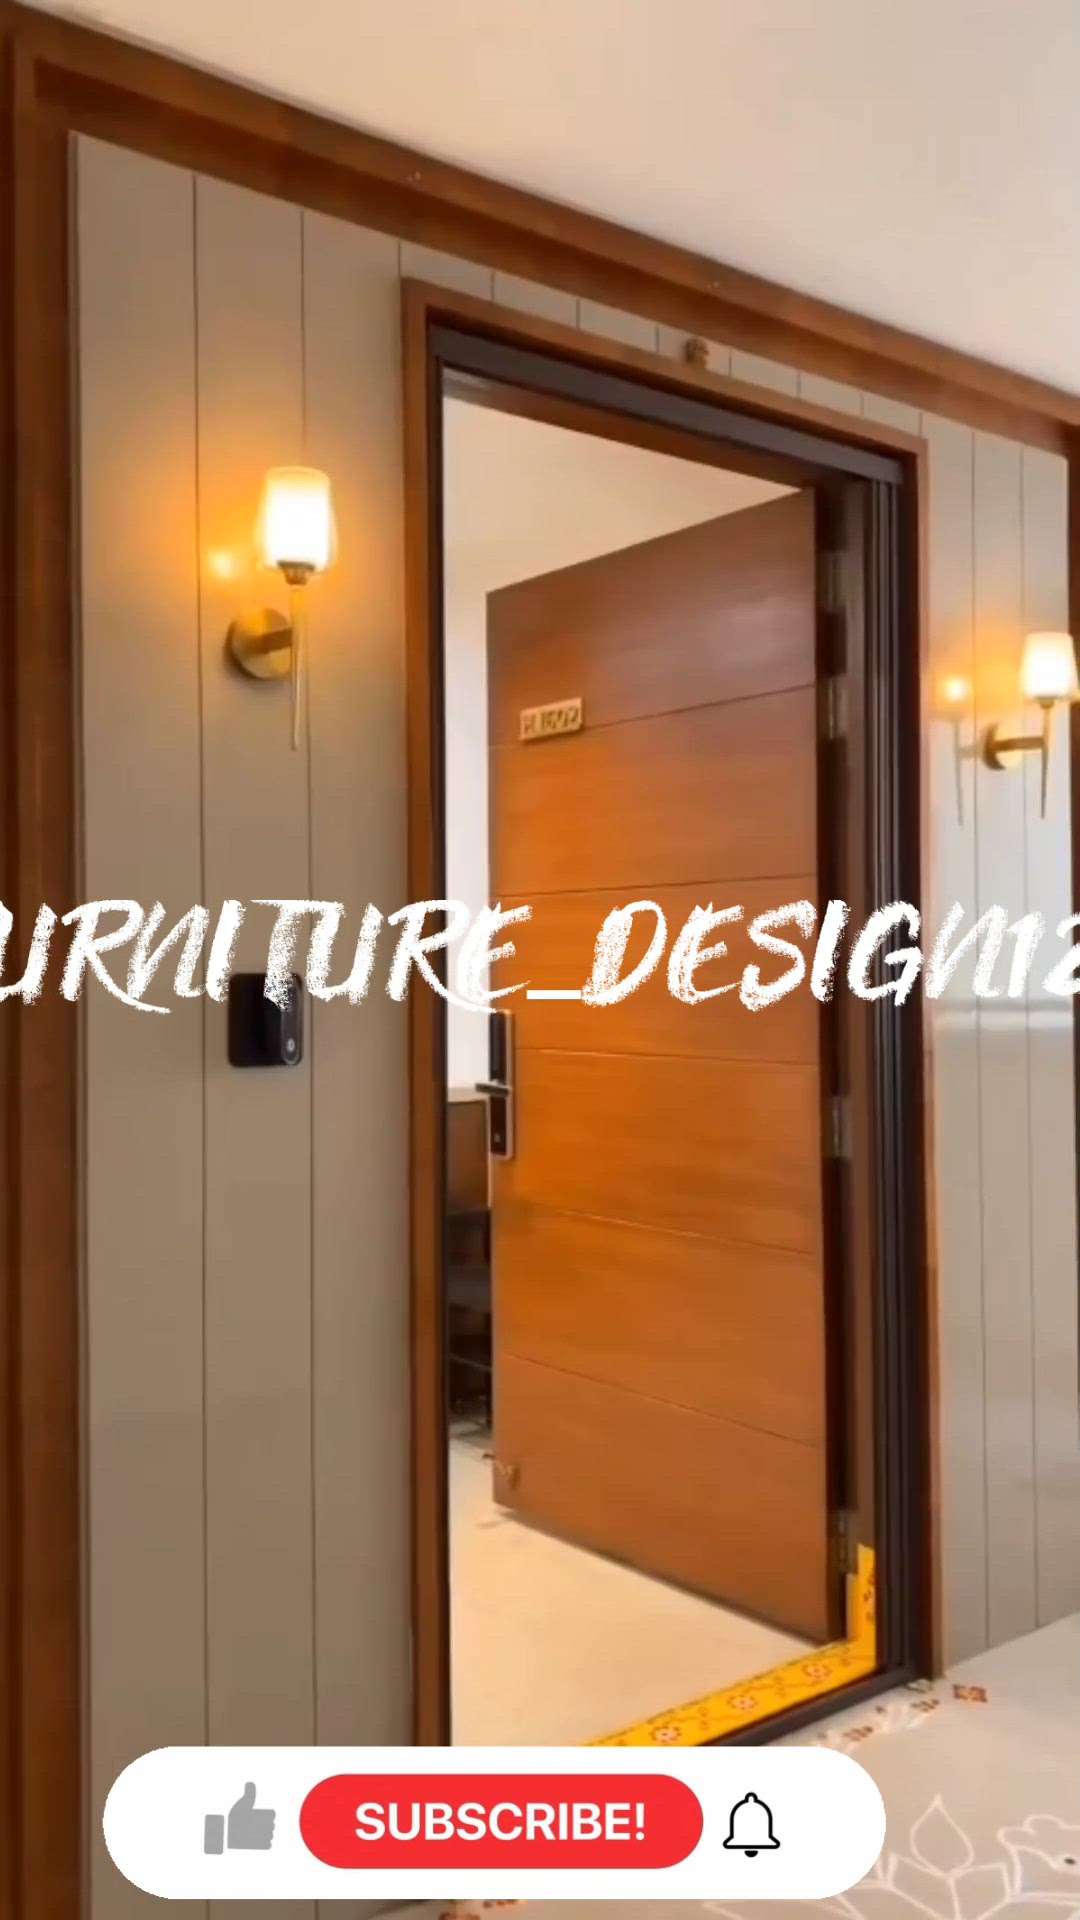 #furniture_design123 YouTube channel